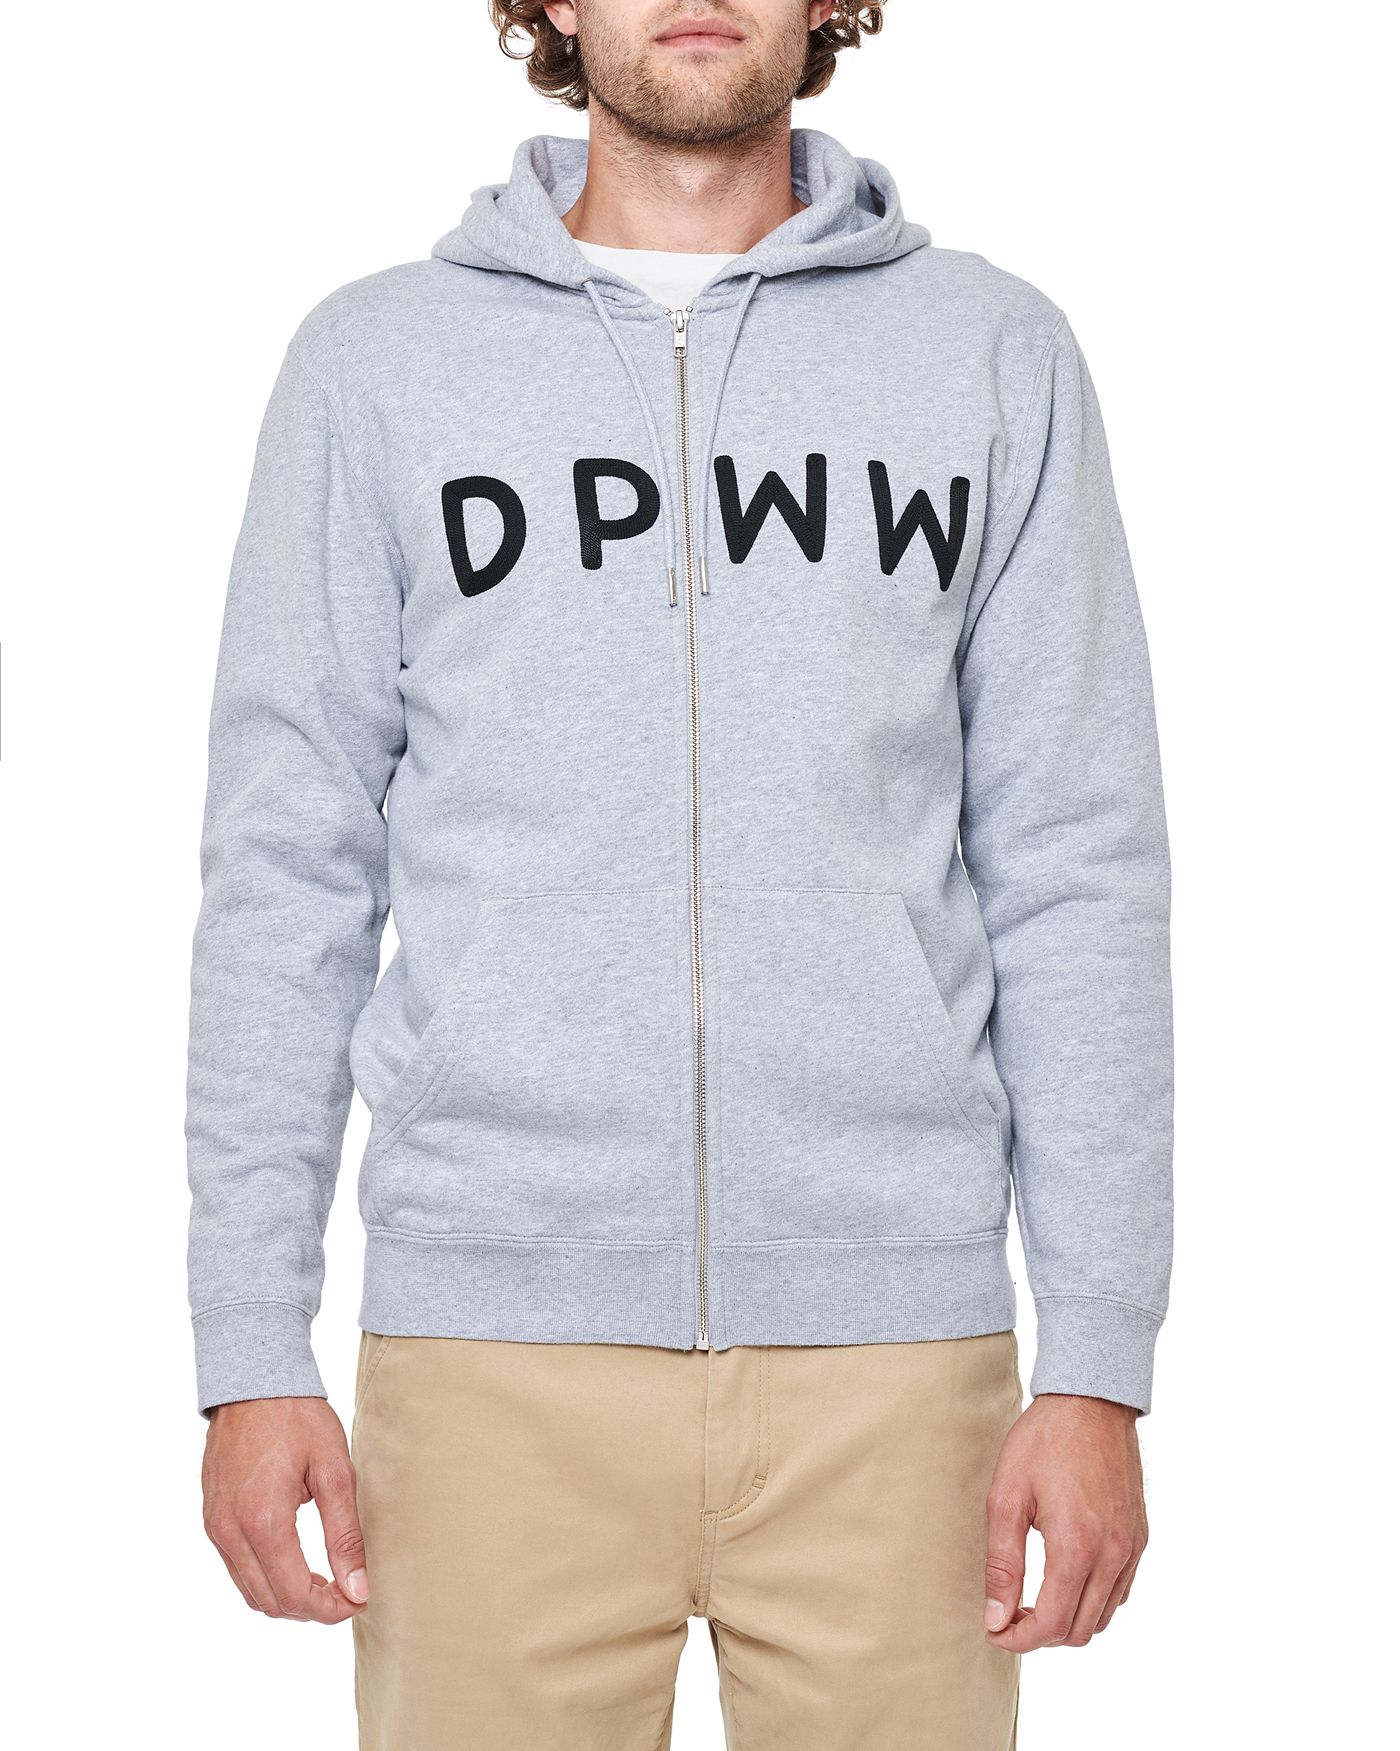 Photo of DPWW Zip Hooded Sweatshirt, Grey Melange